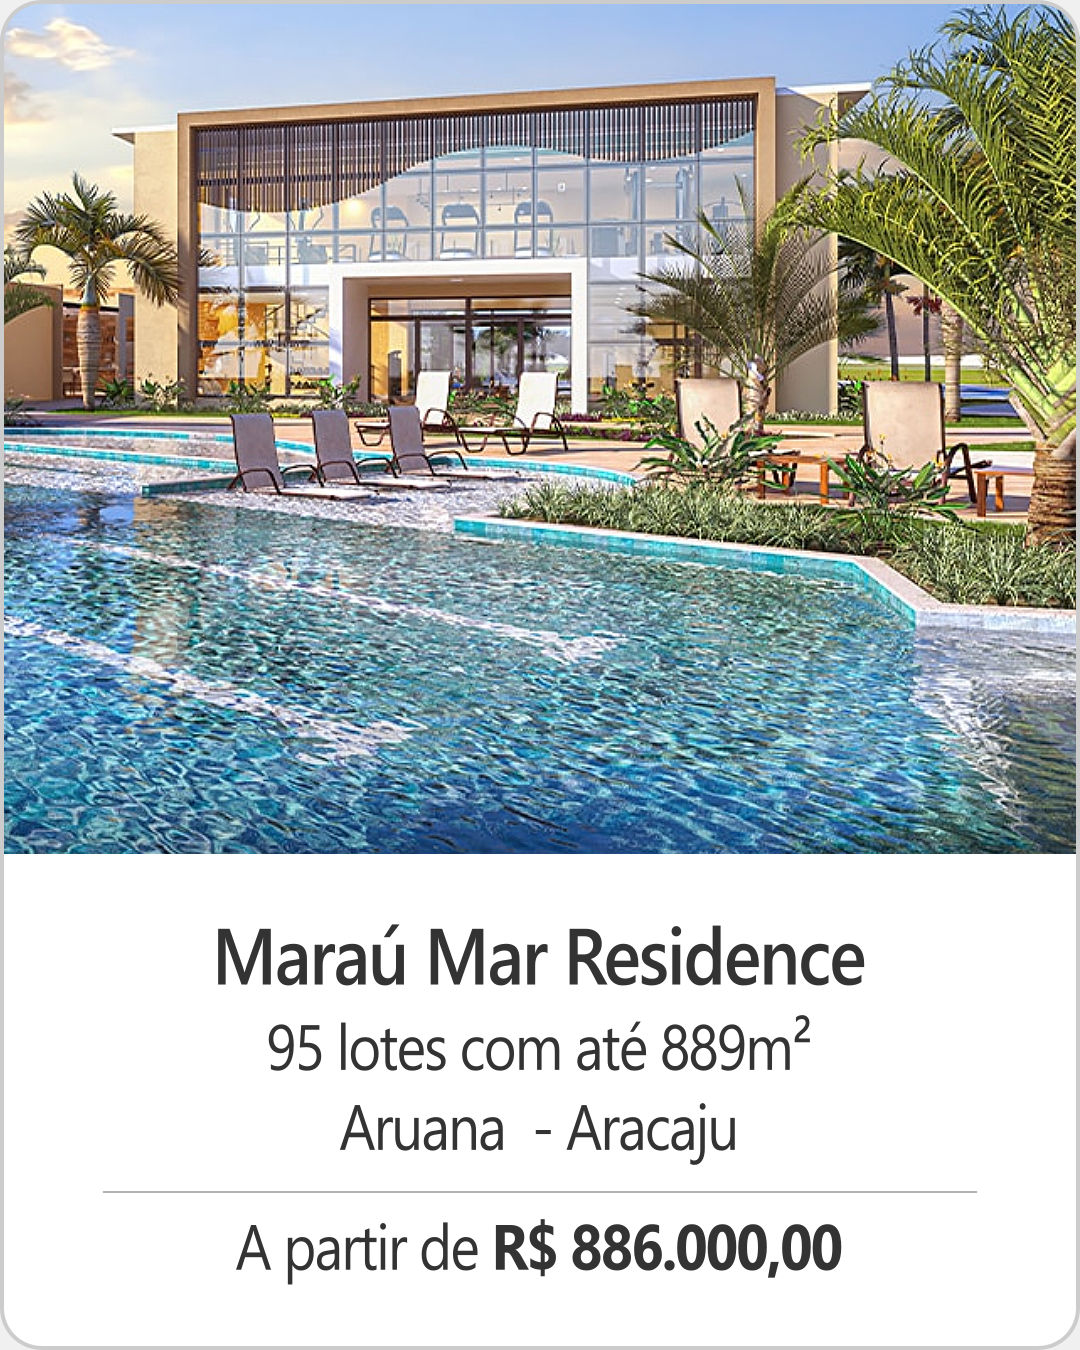 Marau Mar residence